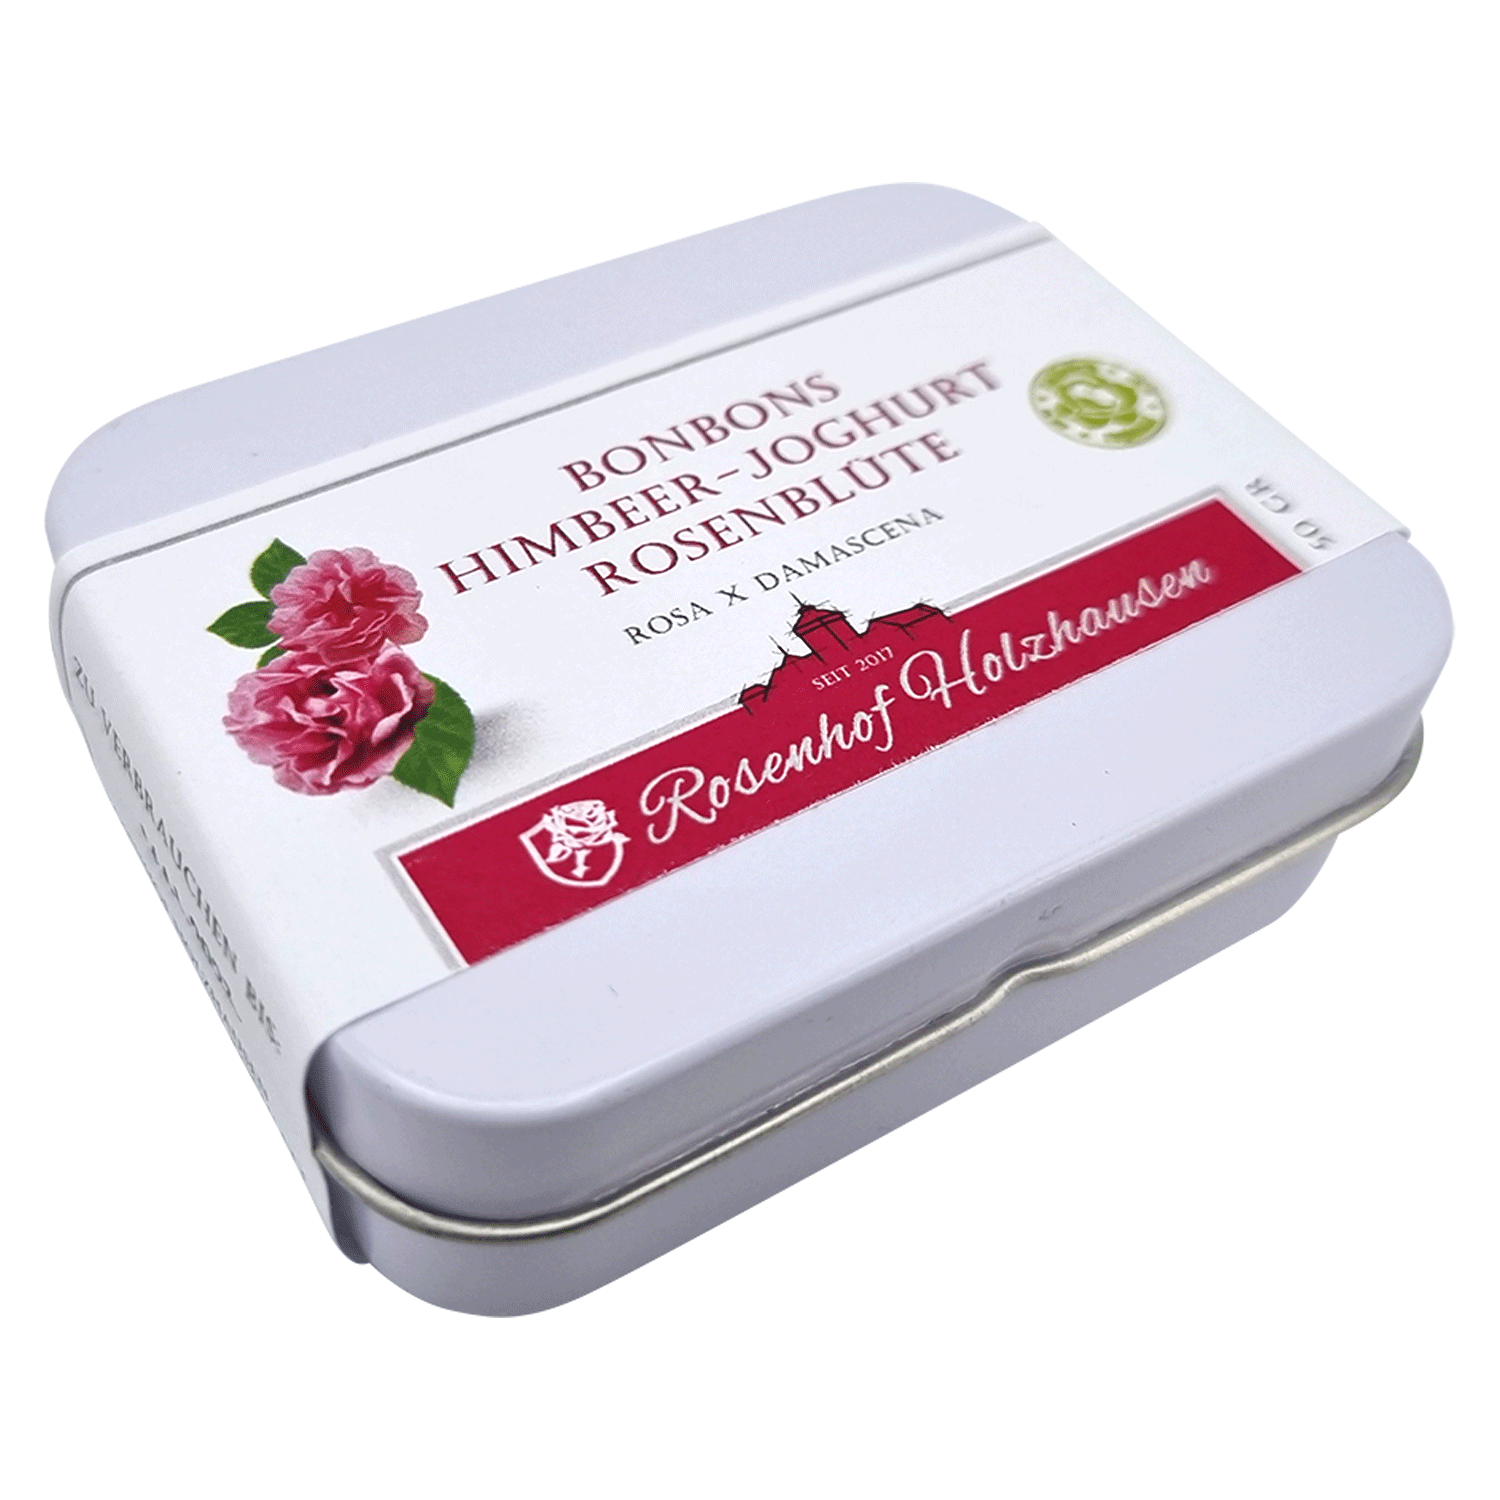 Bonbons - Himbeere-Joghurt-Rosenblüte